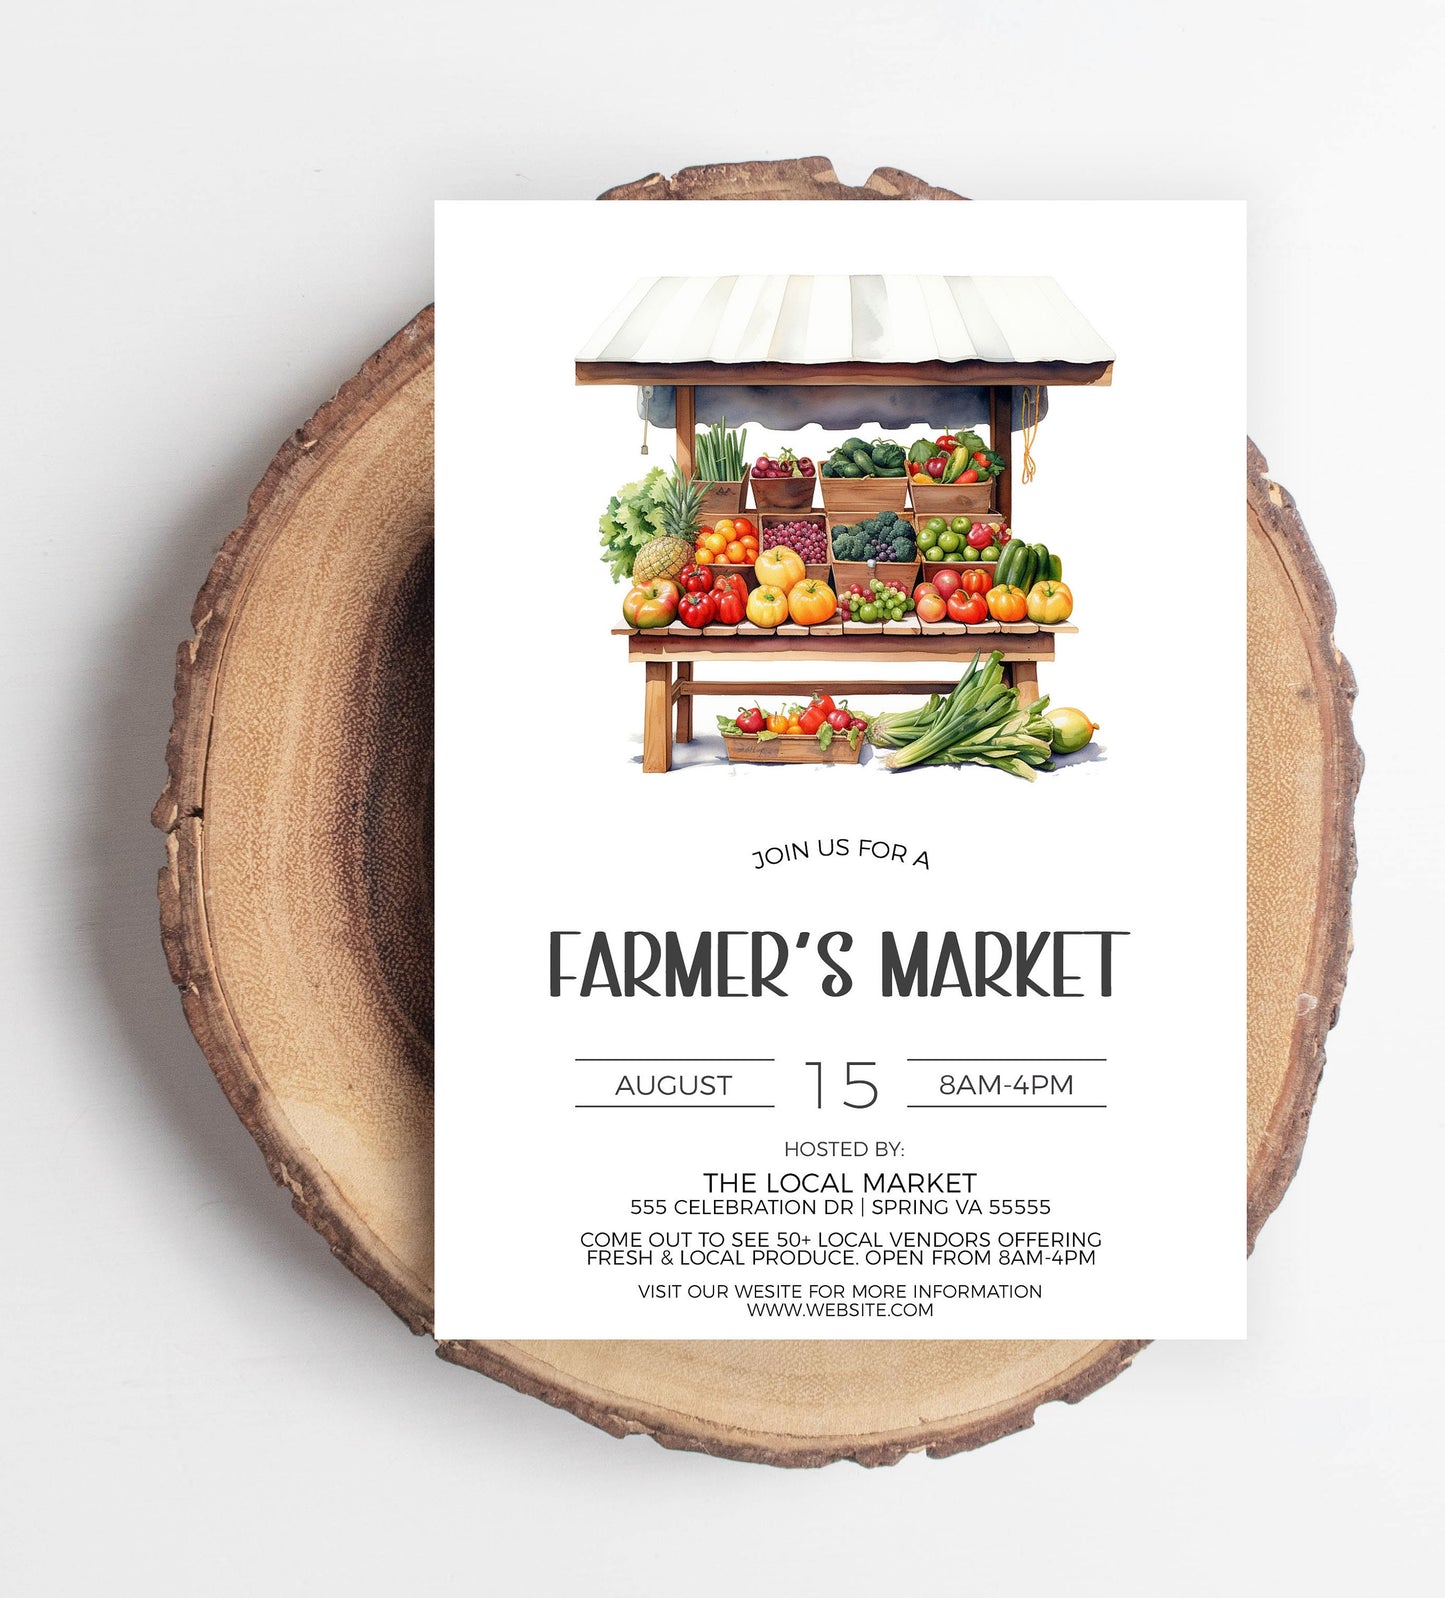 Farmers Market Invitation, Farmer's Market Invite, Local Produce, Farmers Market Flyer Fundraiser, Food Stand, Digital Printable Editable